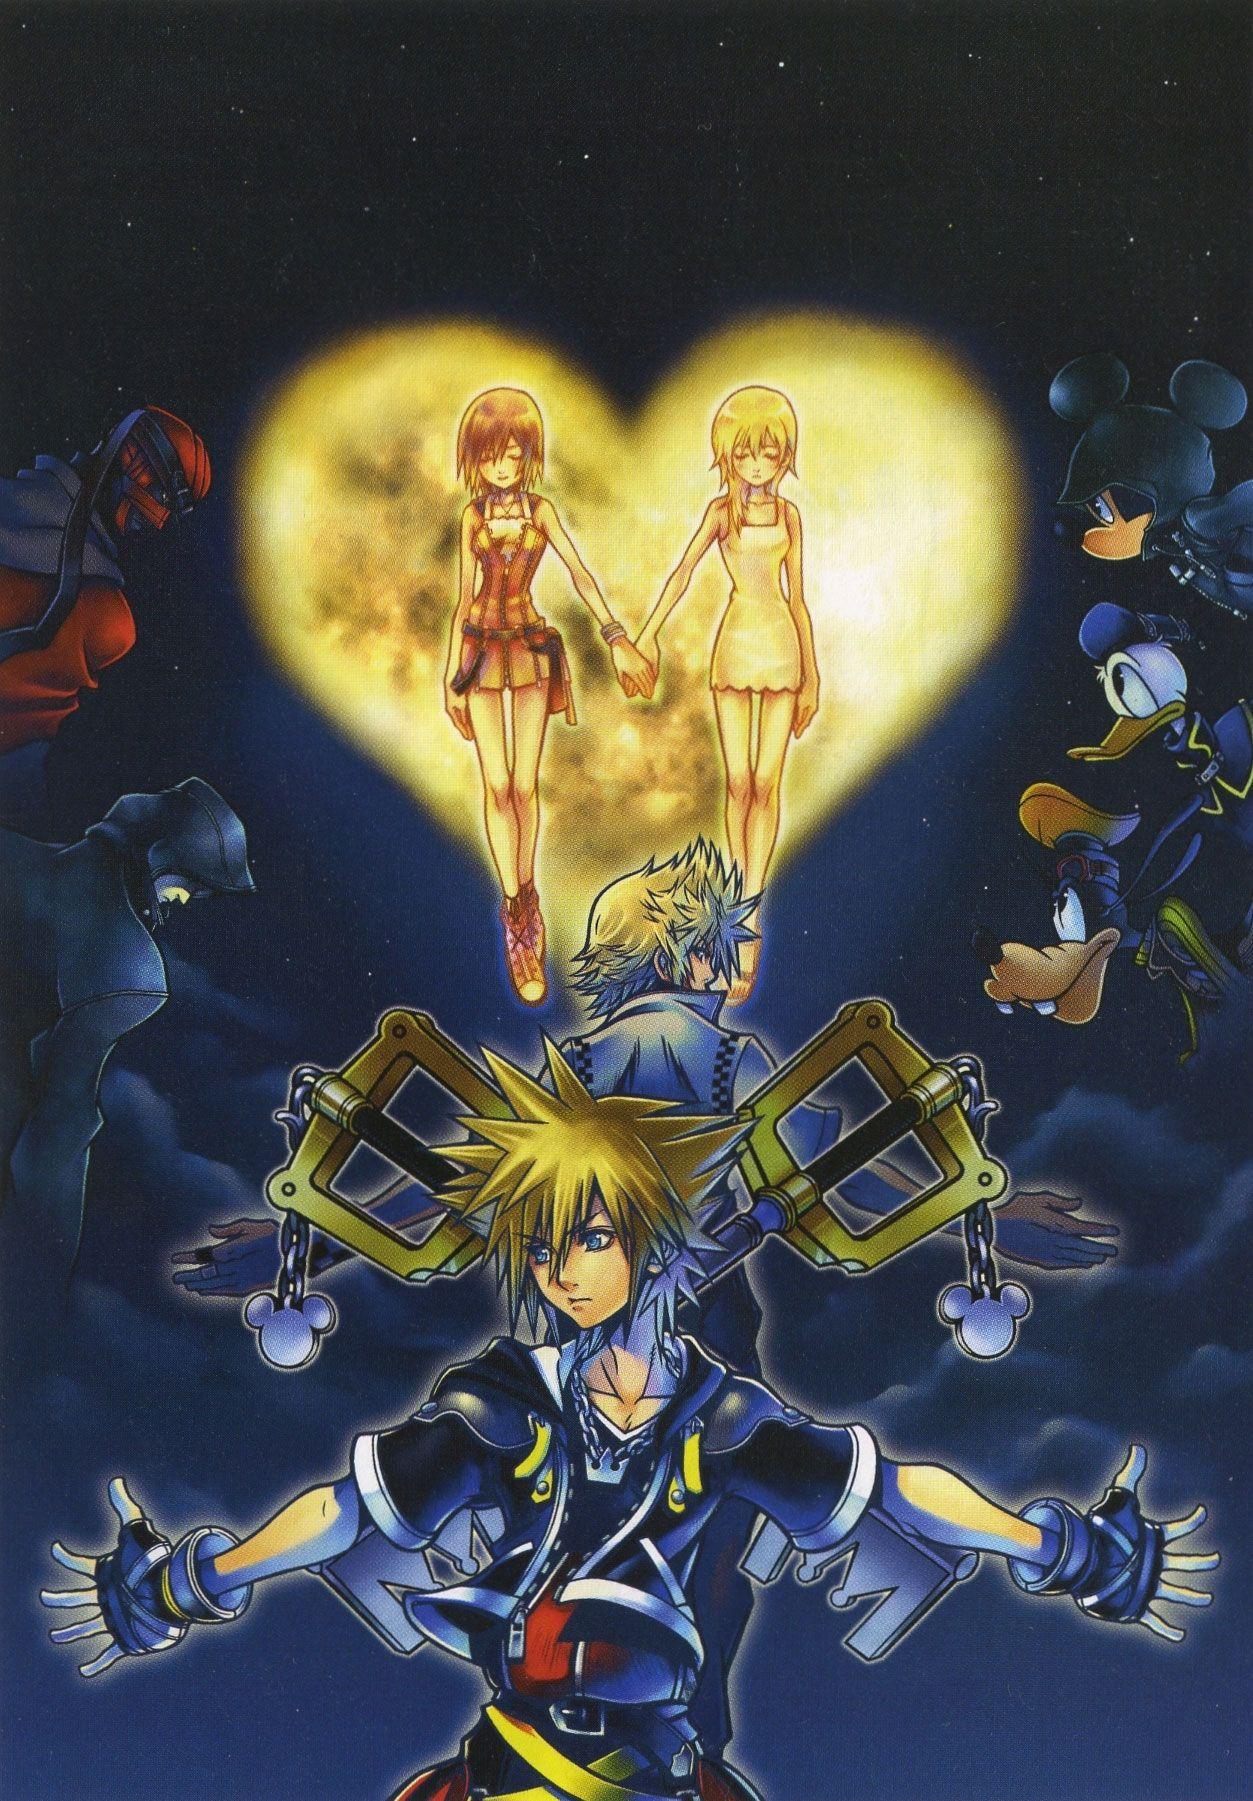 Kingdom Hearts 2 Wallpaper, wallpaper, Kingdom Hearts 2